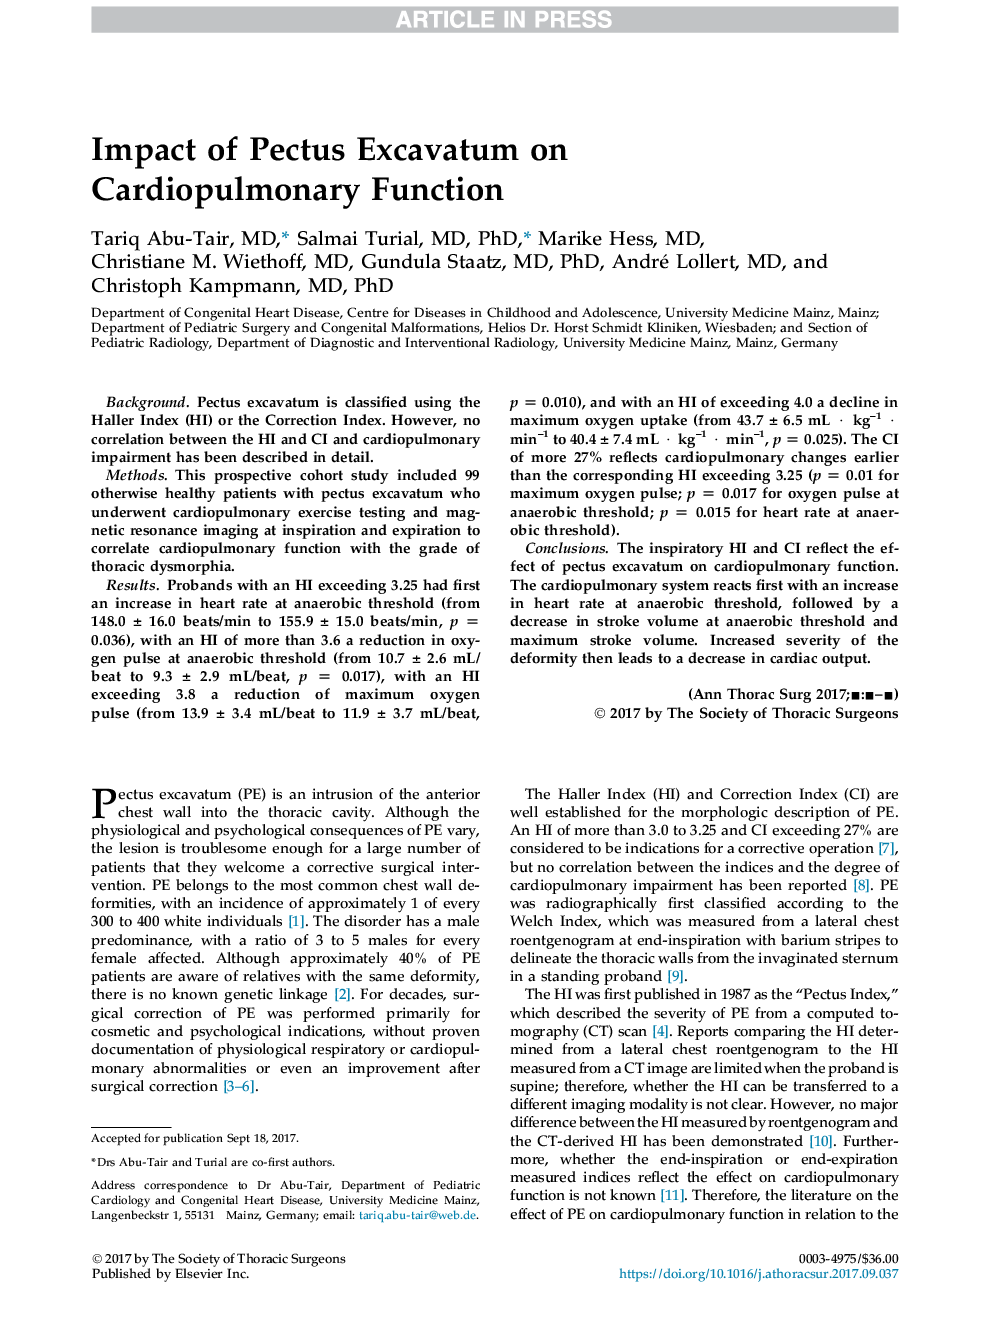 Impact of Pectus Excavatum on Cardiopulmonary Function